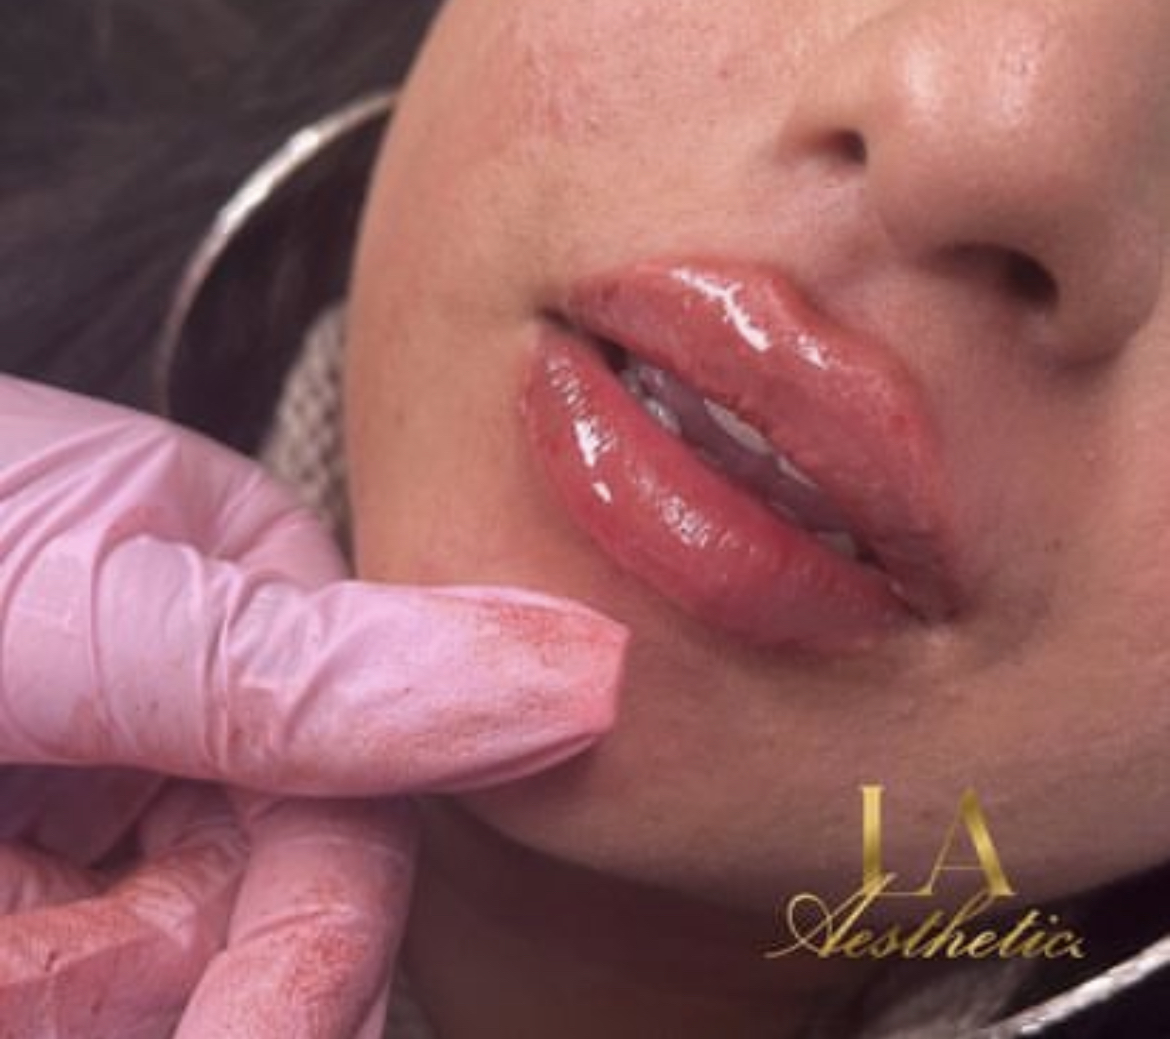 LA Aesthetics | Non-surgical cosmetics | London and Essex gallery image 20